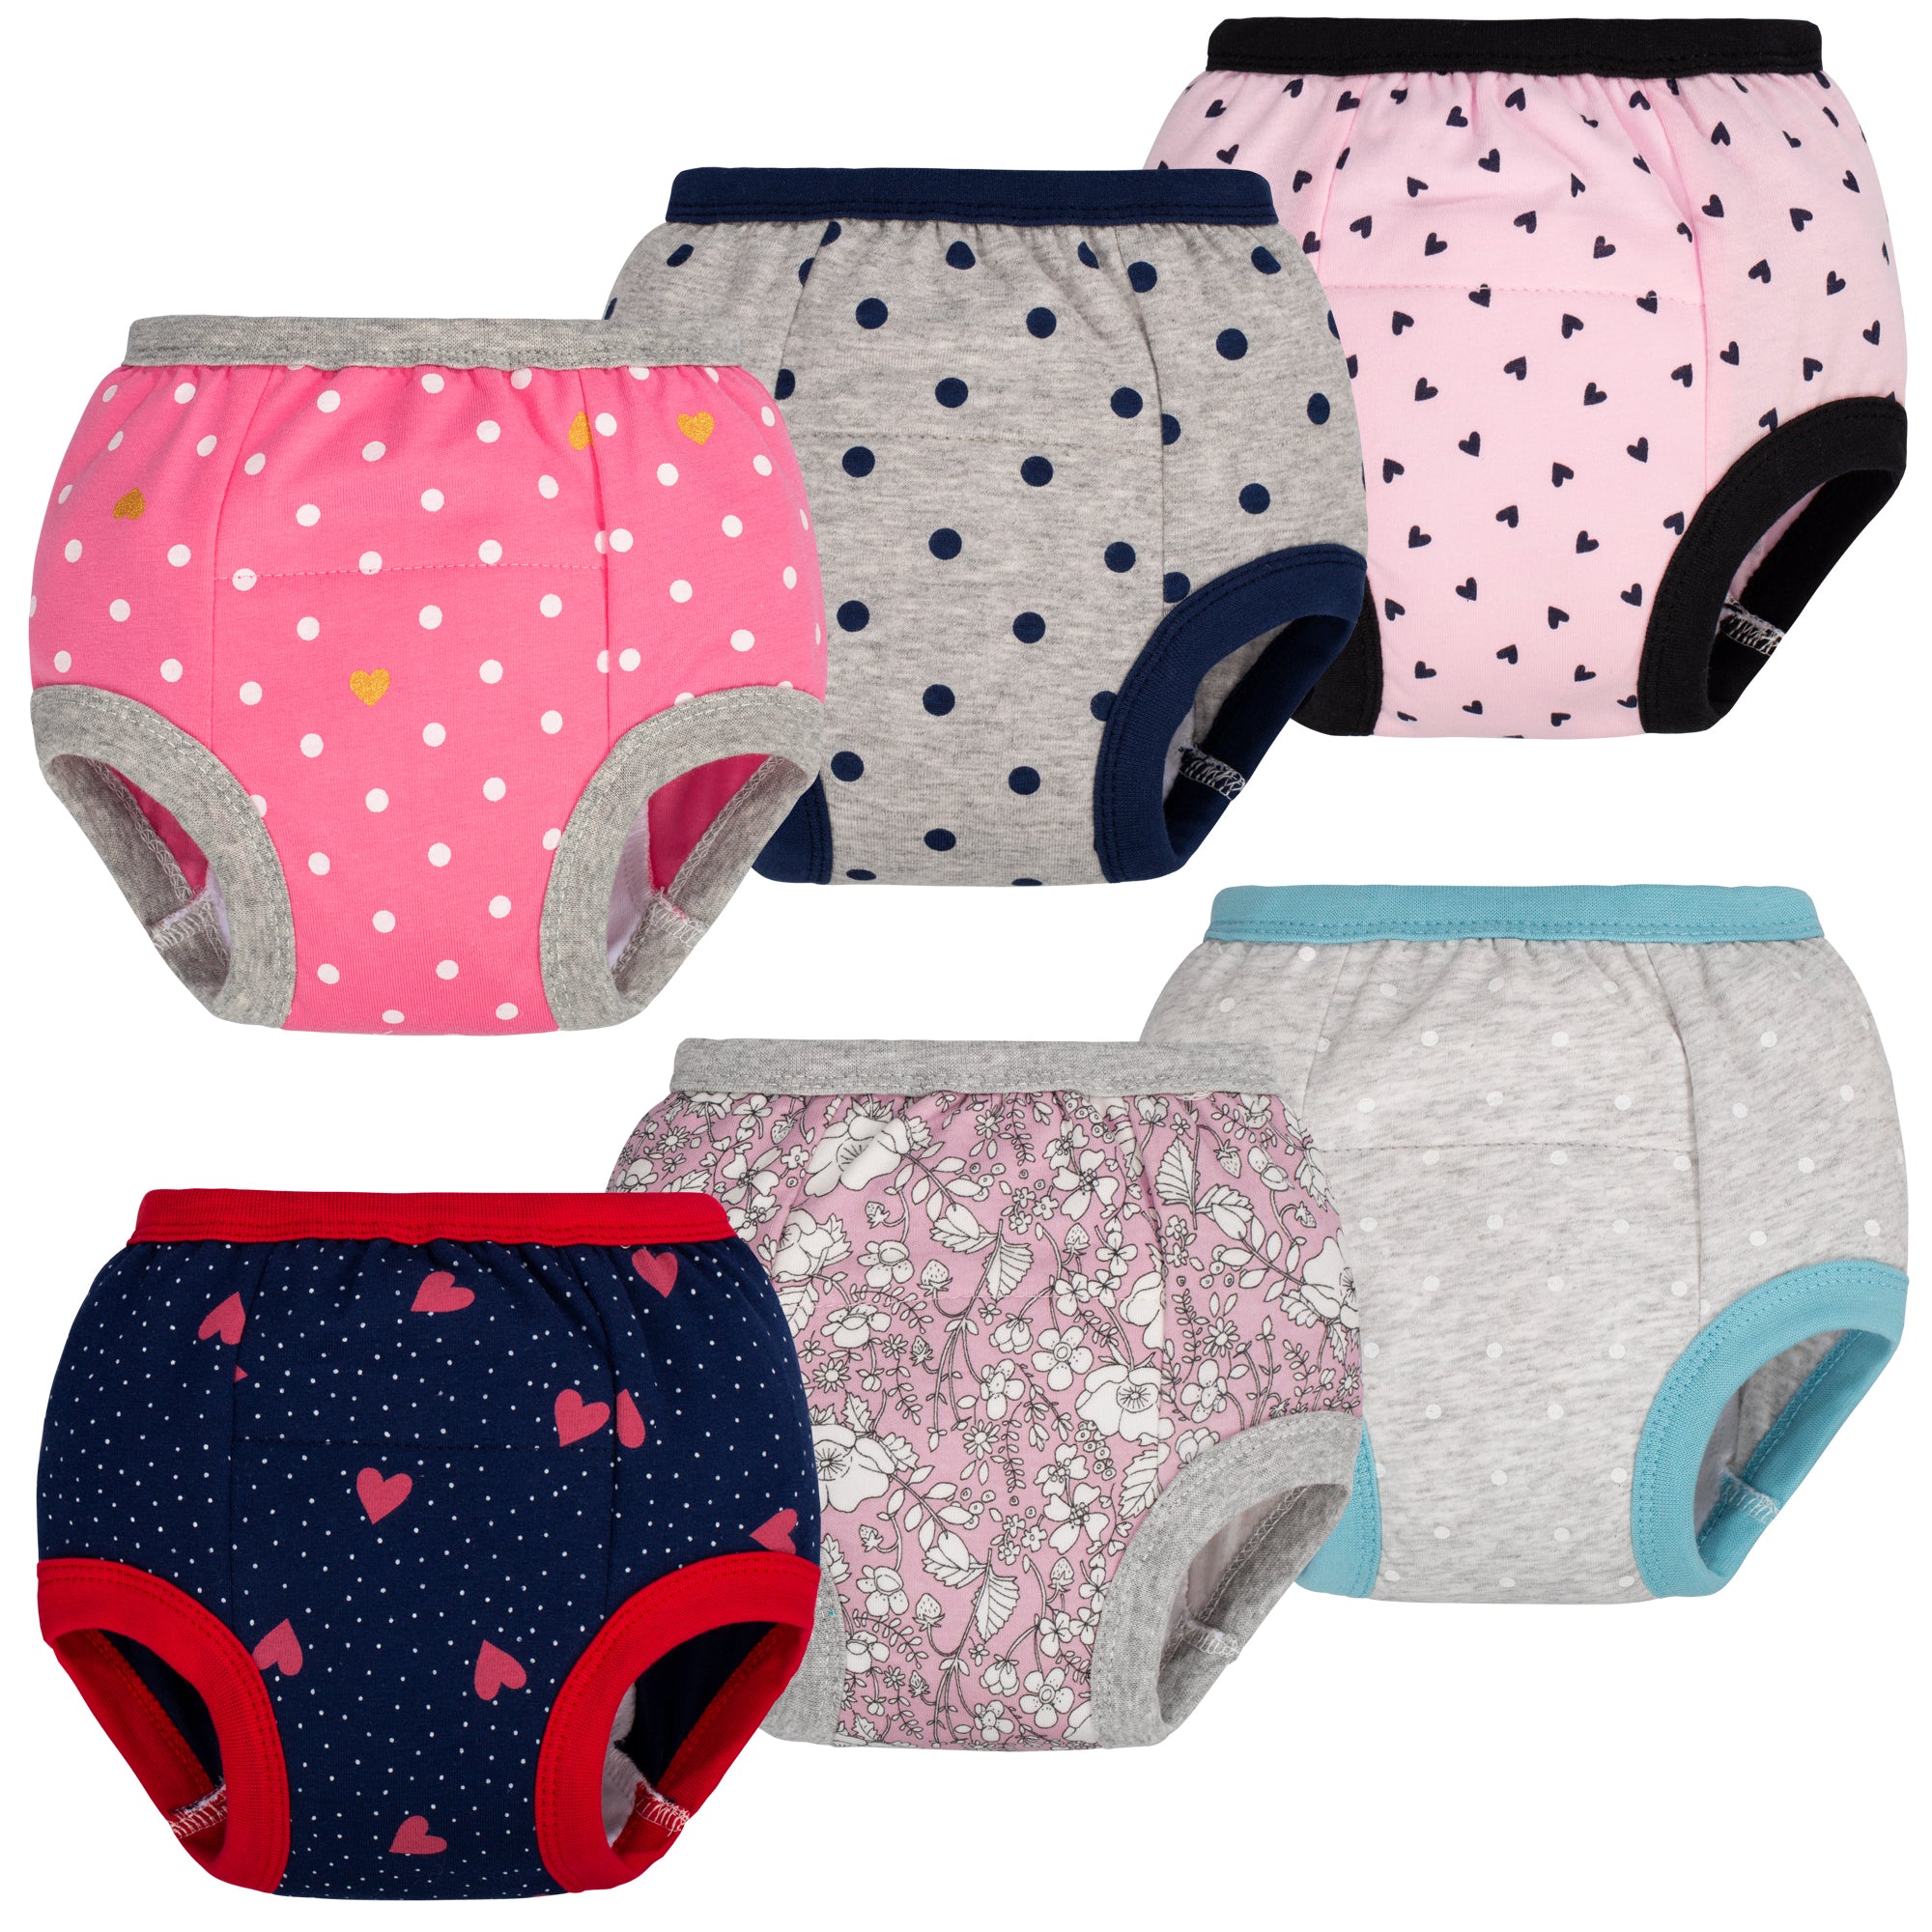 Buy BIG ELEPHANT Unisex Baby Cotton Potty Training Pants Underwear